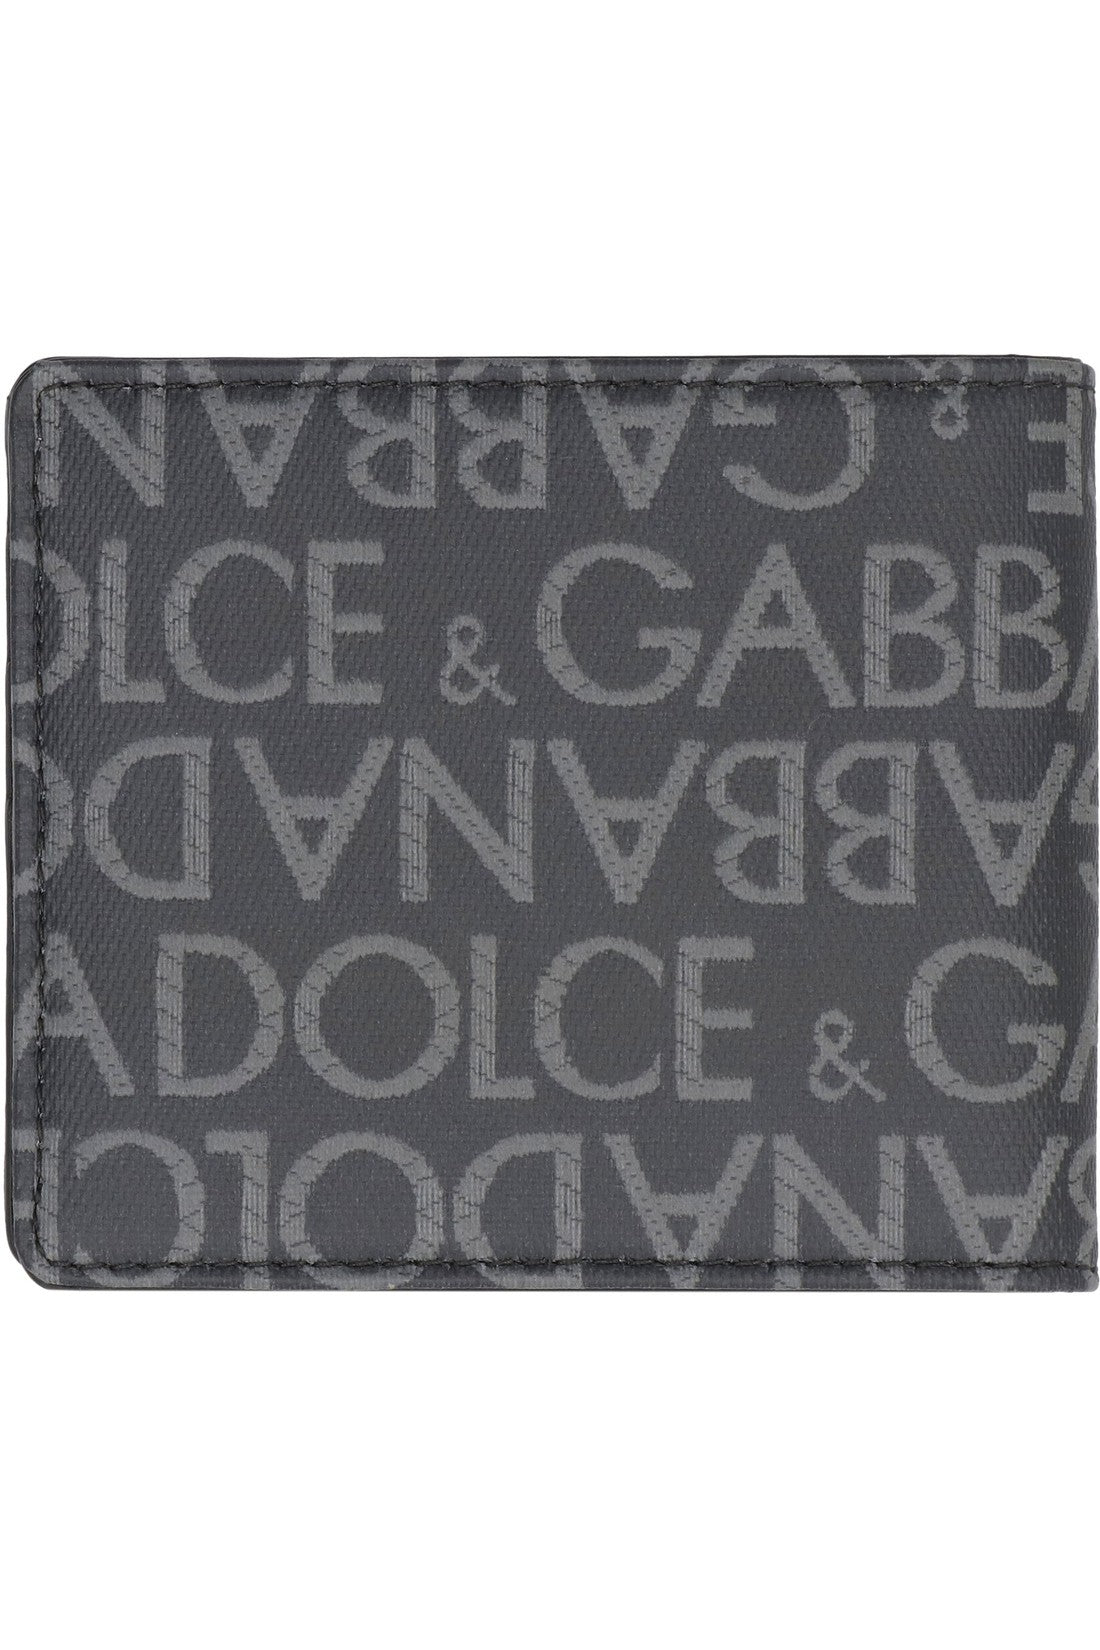 Dolce & Gabbana-OUTLET-SALE-All-over logo wallet-ARCHIVIST